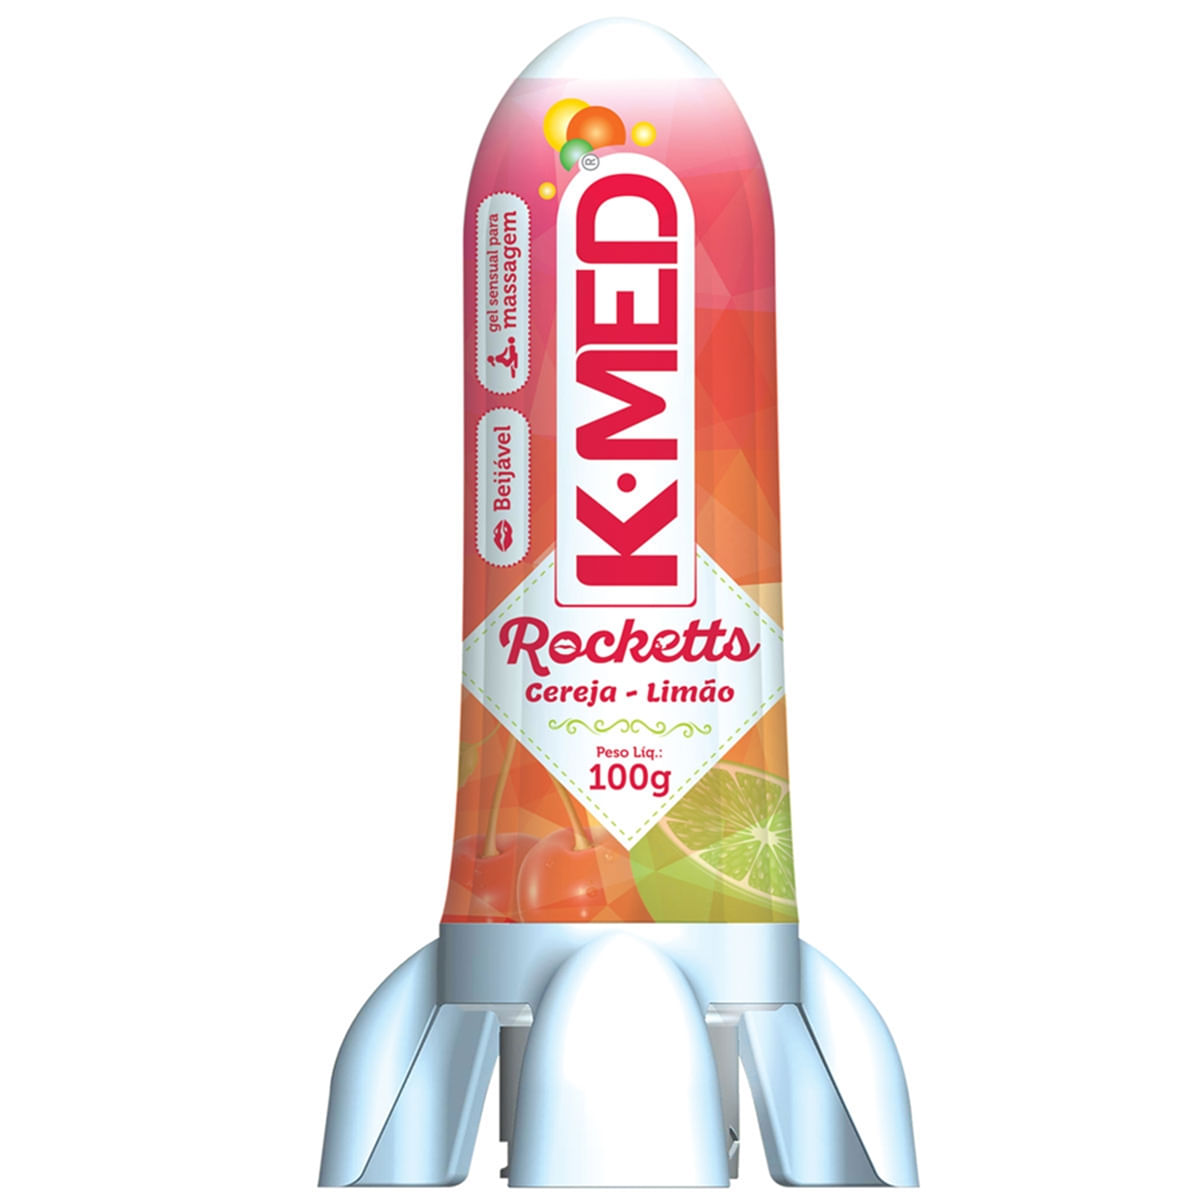 Rocketts Cereja - Limão Gel Sensual para Massagem Beijável 100g K-MED